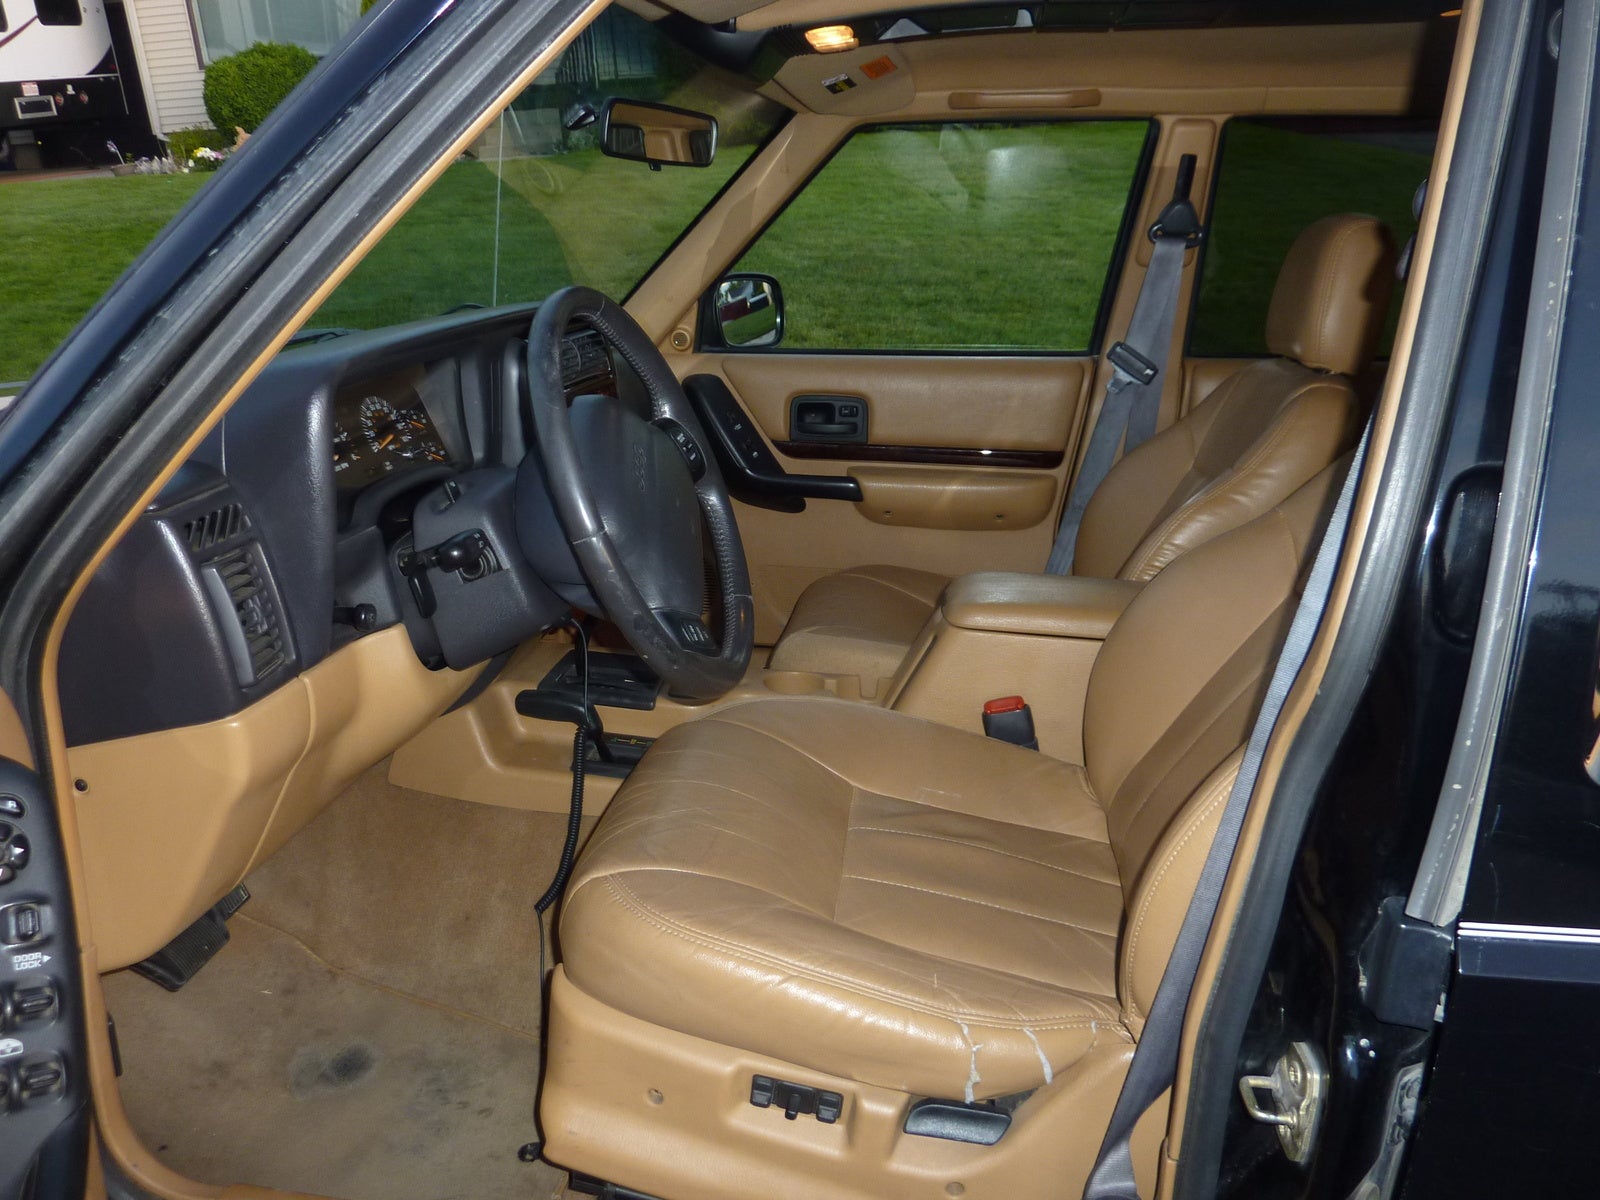 1998 Jeep Cherokee - Interior Pictures - CarGurus